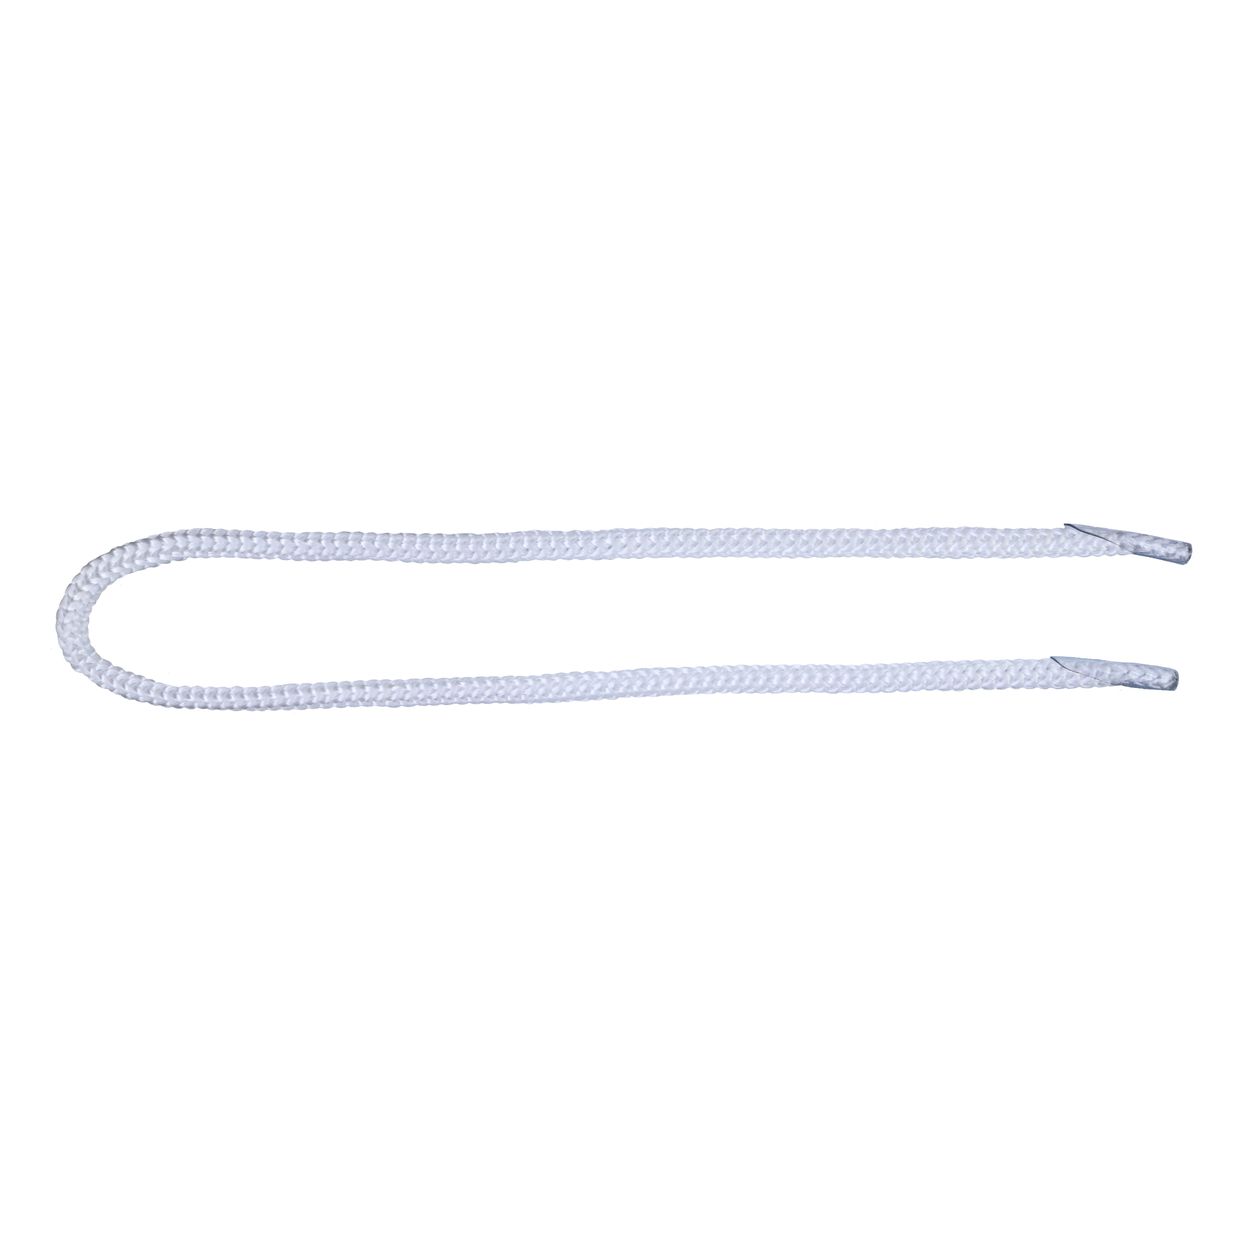 Шнурок для пакетов с крючком арт. 5В511 п/п, диам. 5 мм, дл. 35 см, № 001 ДС белый (уп. 50 пар)